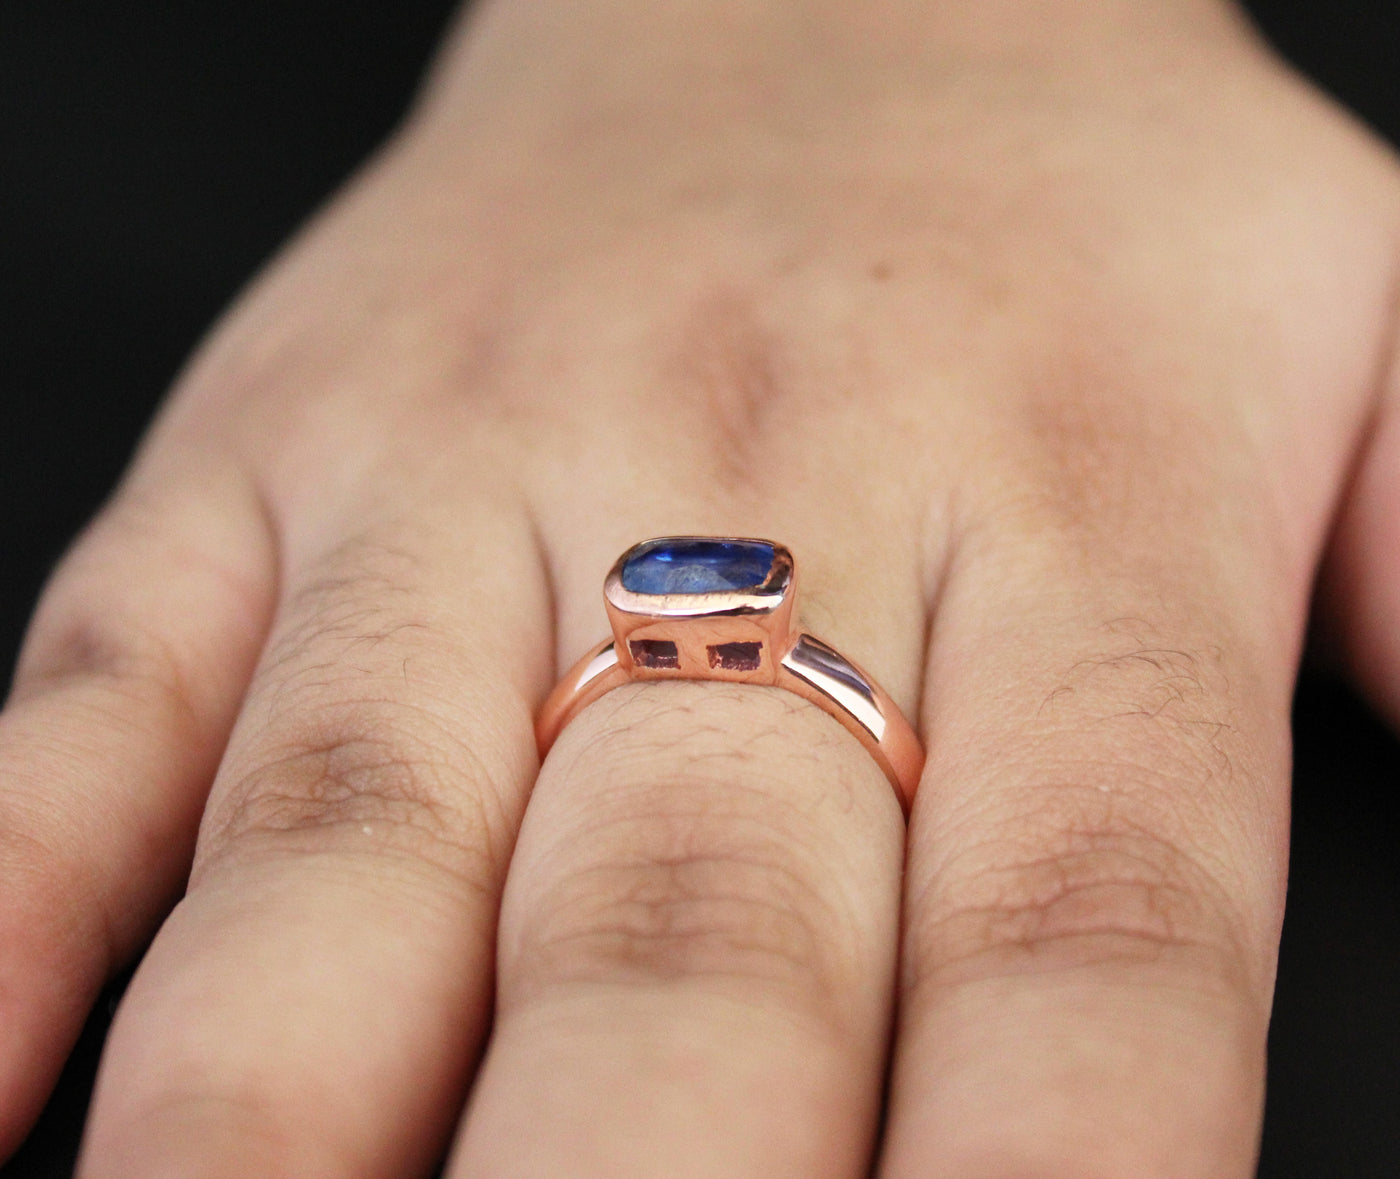 Blue Kyanite Ring, Sterling Silver Ring, Genuine Blue Kyanite Ring, Blue Sterling Silver Kyanite Ring, Silversmith Ring, Deep Blue Ring